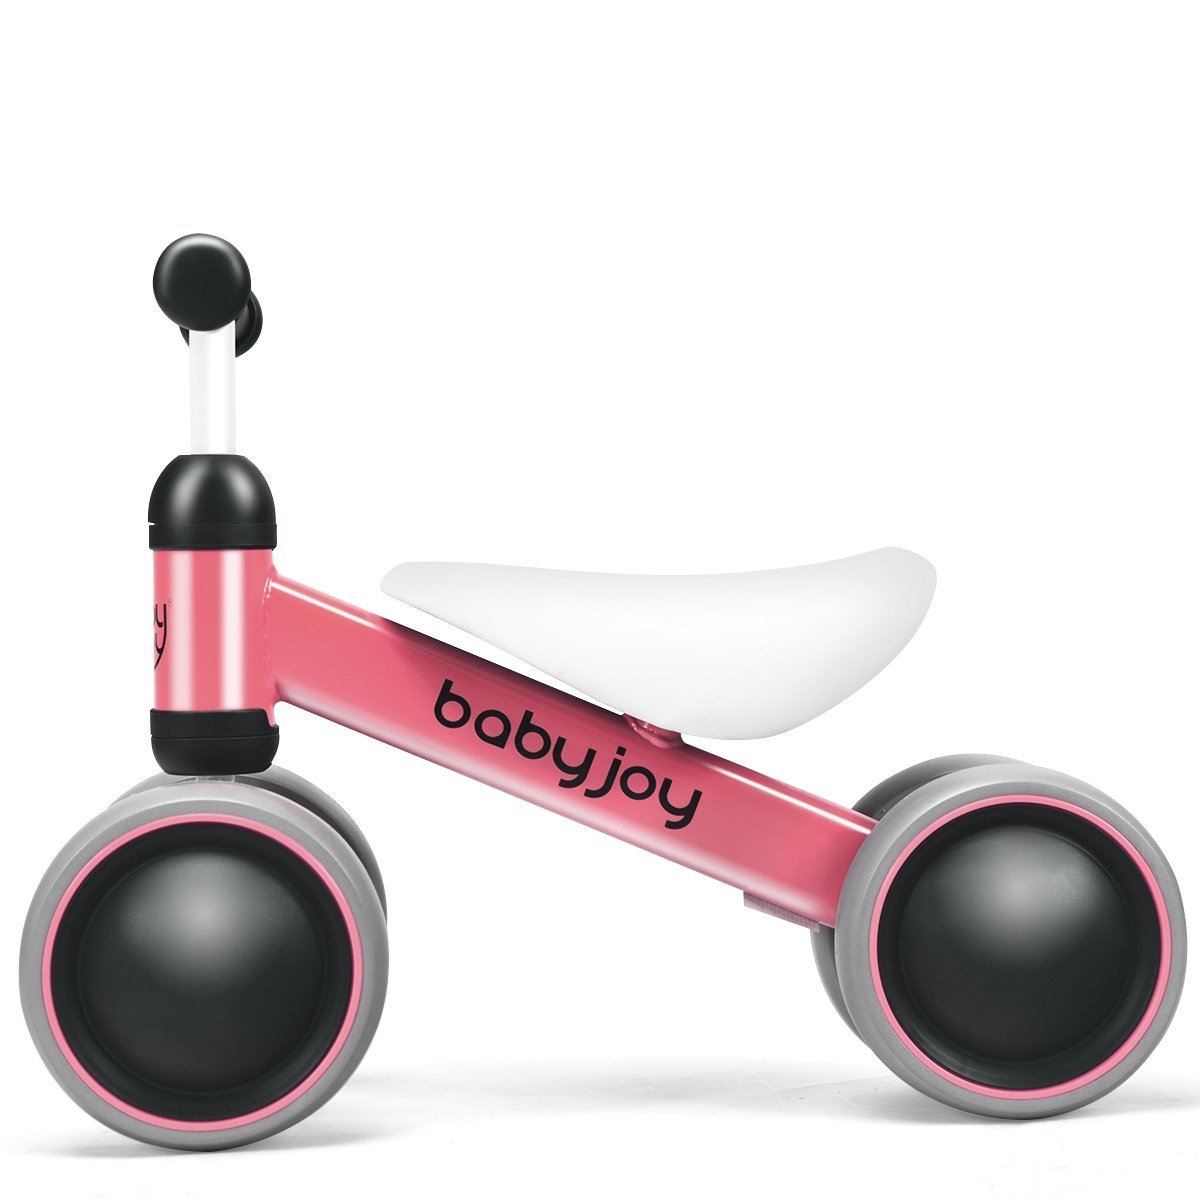 4 Wheels No-Pedal Baby Balance Bike, Pink at Gallery Canada